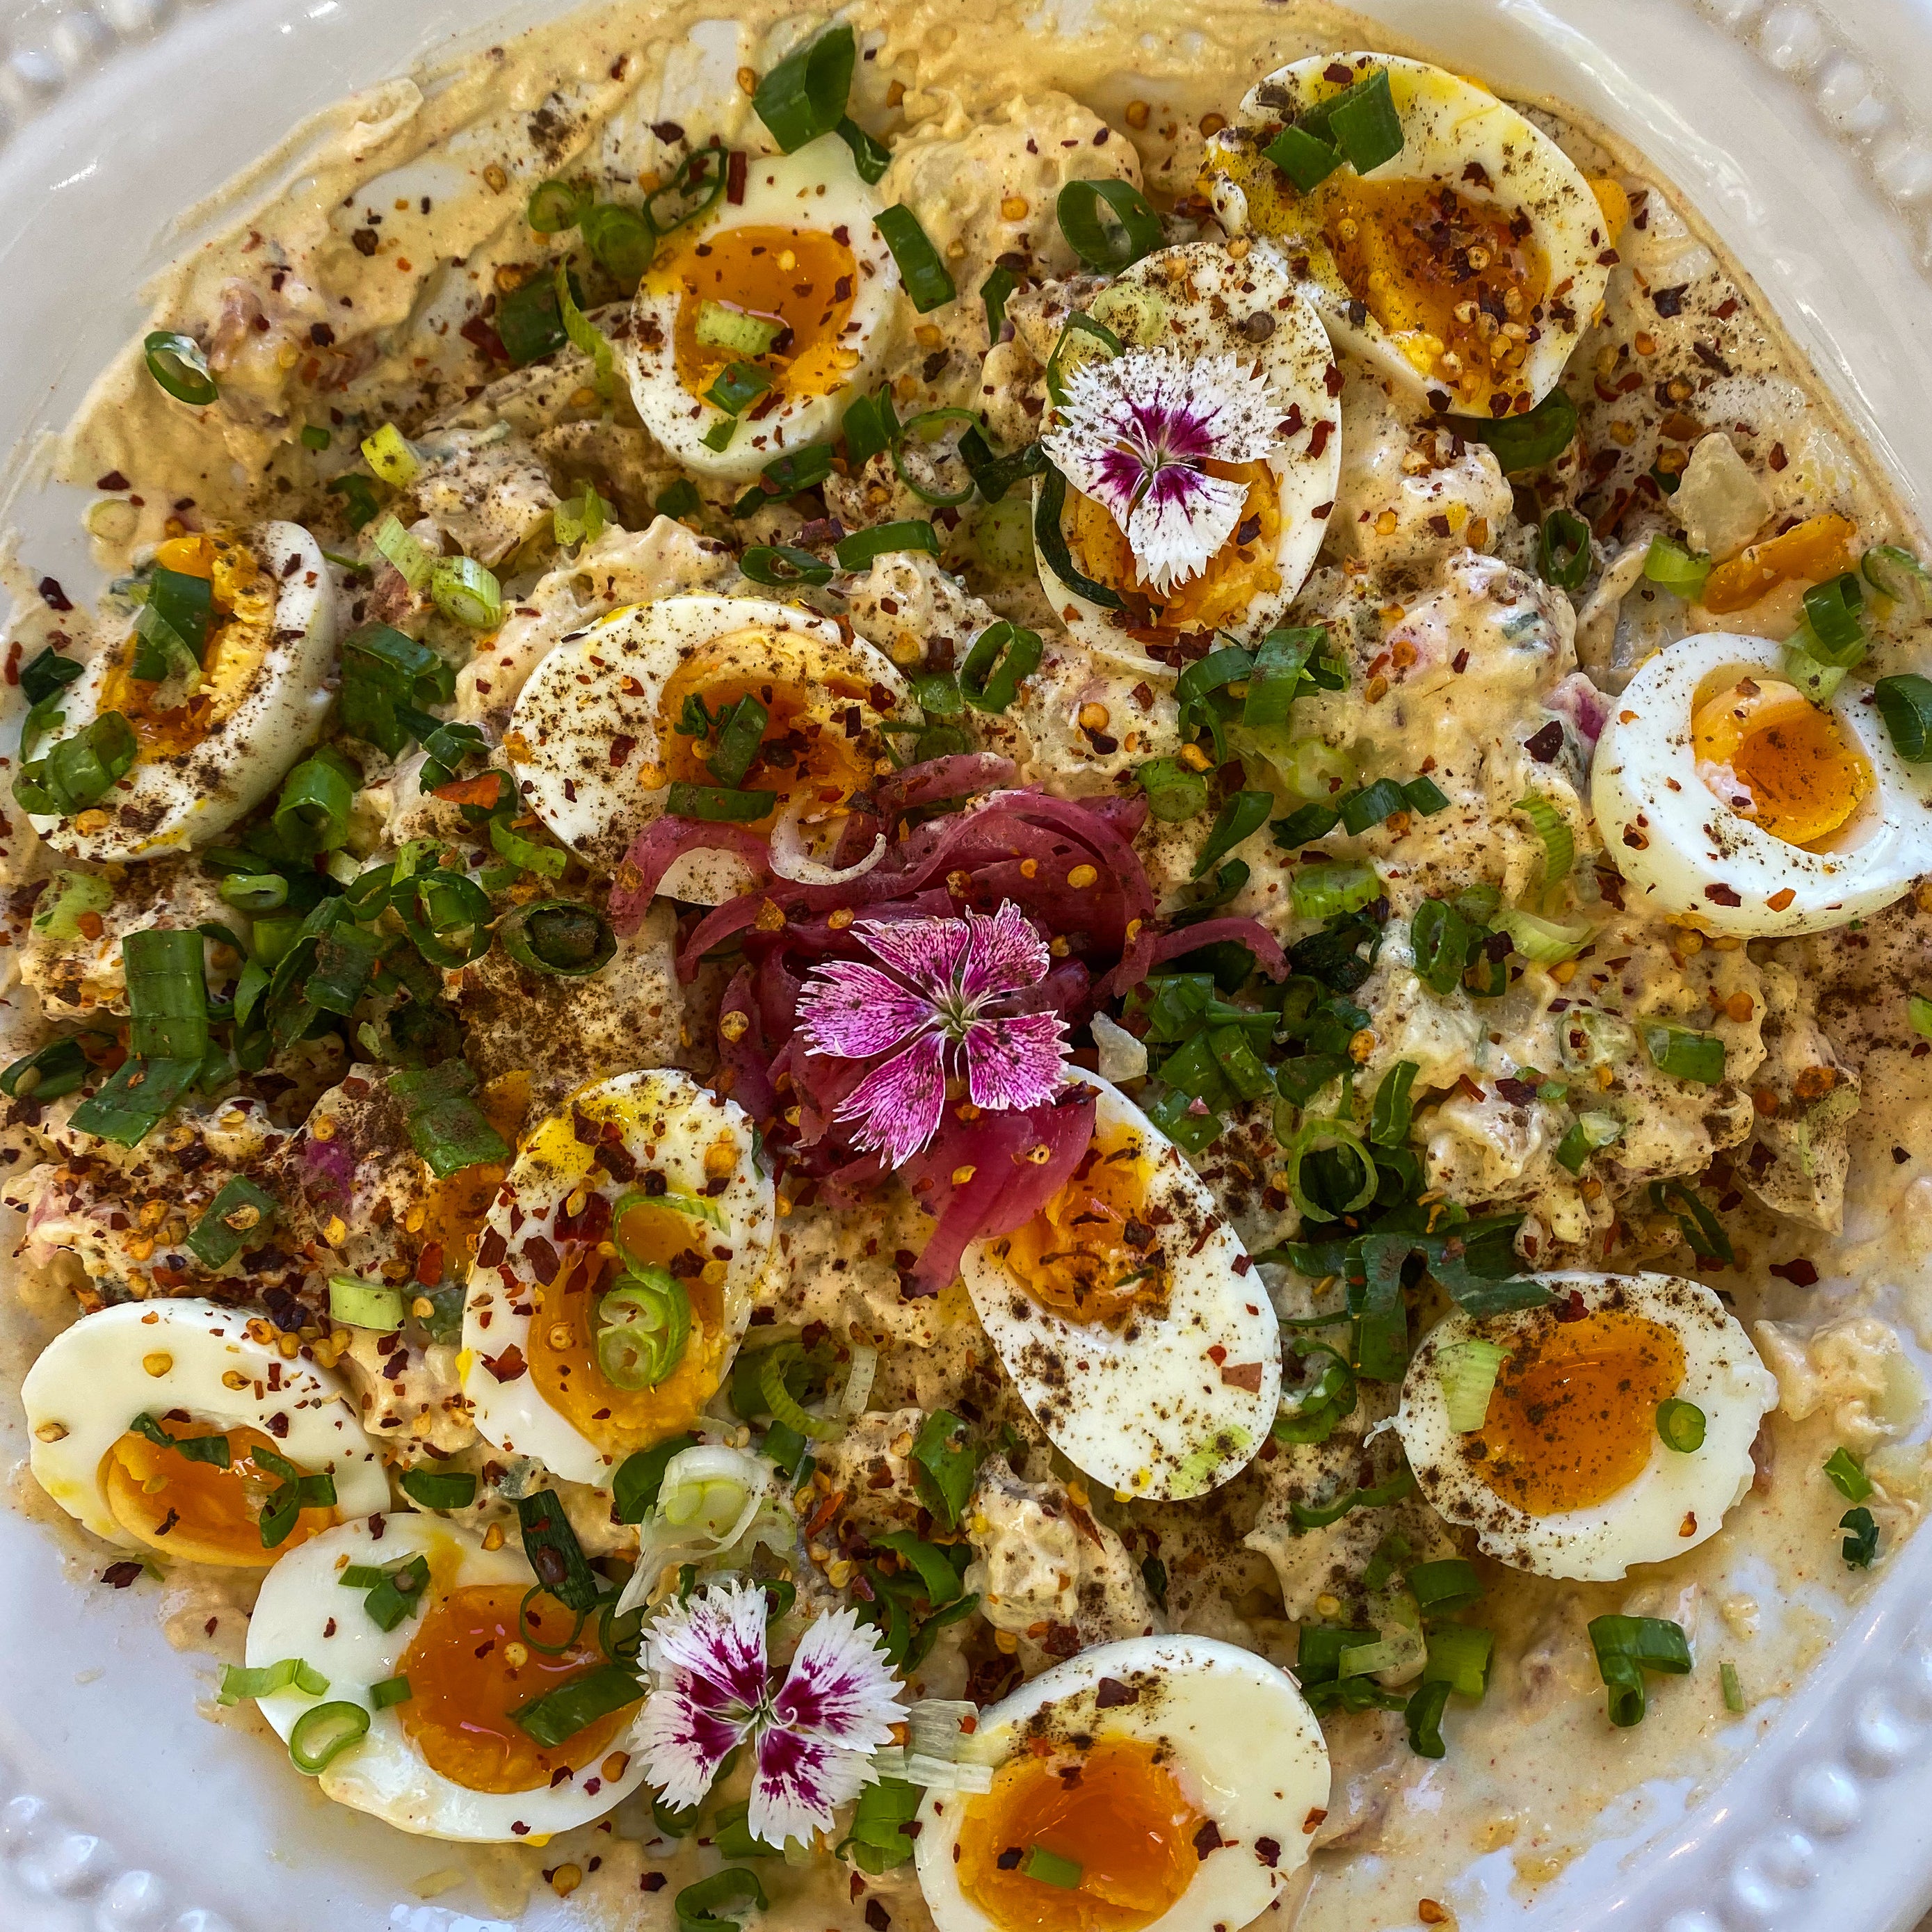 Elevated Egg & Potato Salad